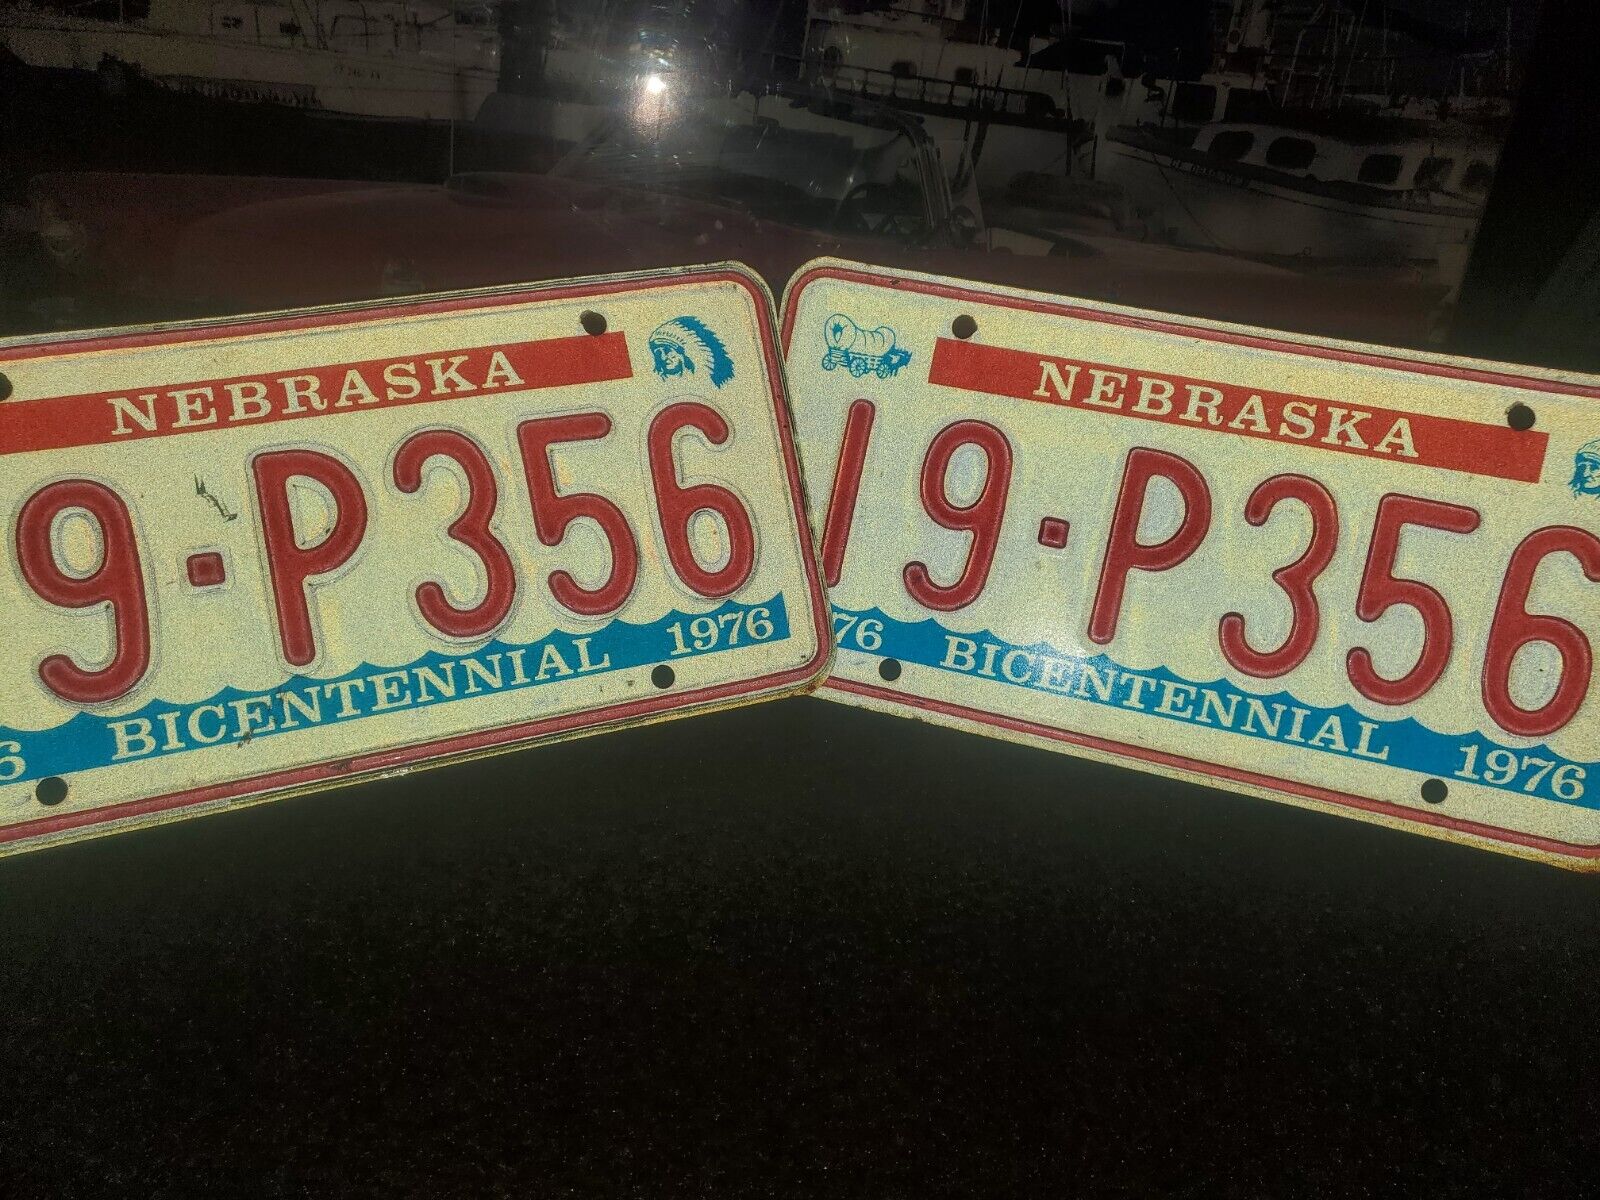 1976 Nebraska bicentennial license plate set number i-9-p356 mint condition